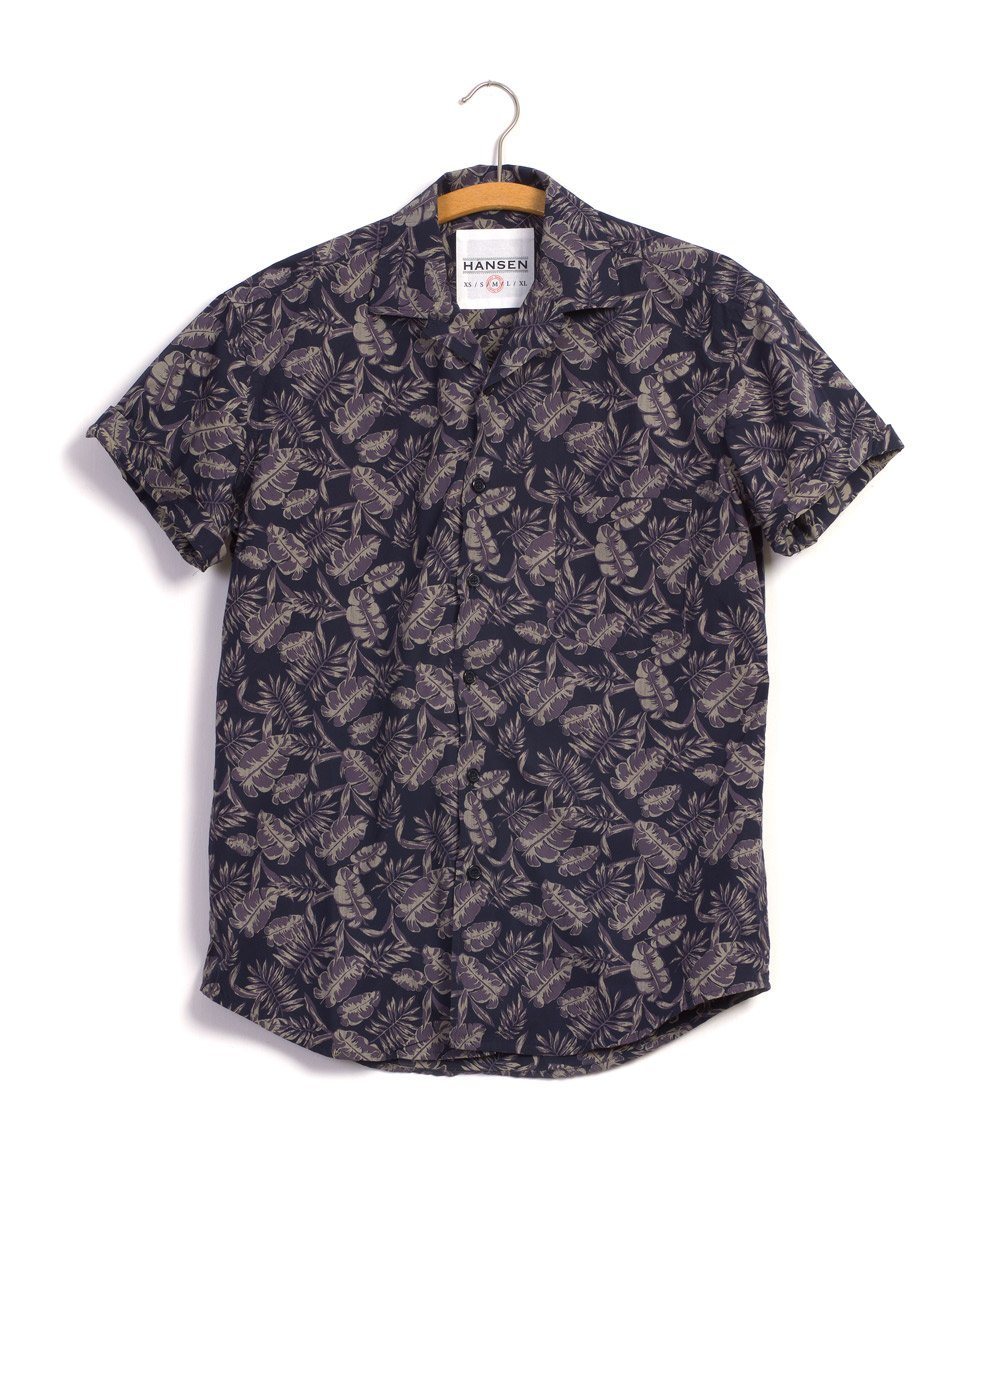 JONNY | Printed Short Sleeve Shirt | Jungleplant | €200 -HANSEN Garments- HANSEN Garments